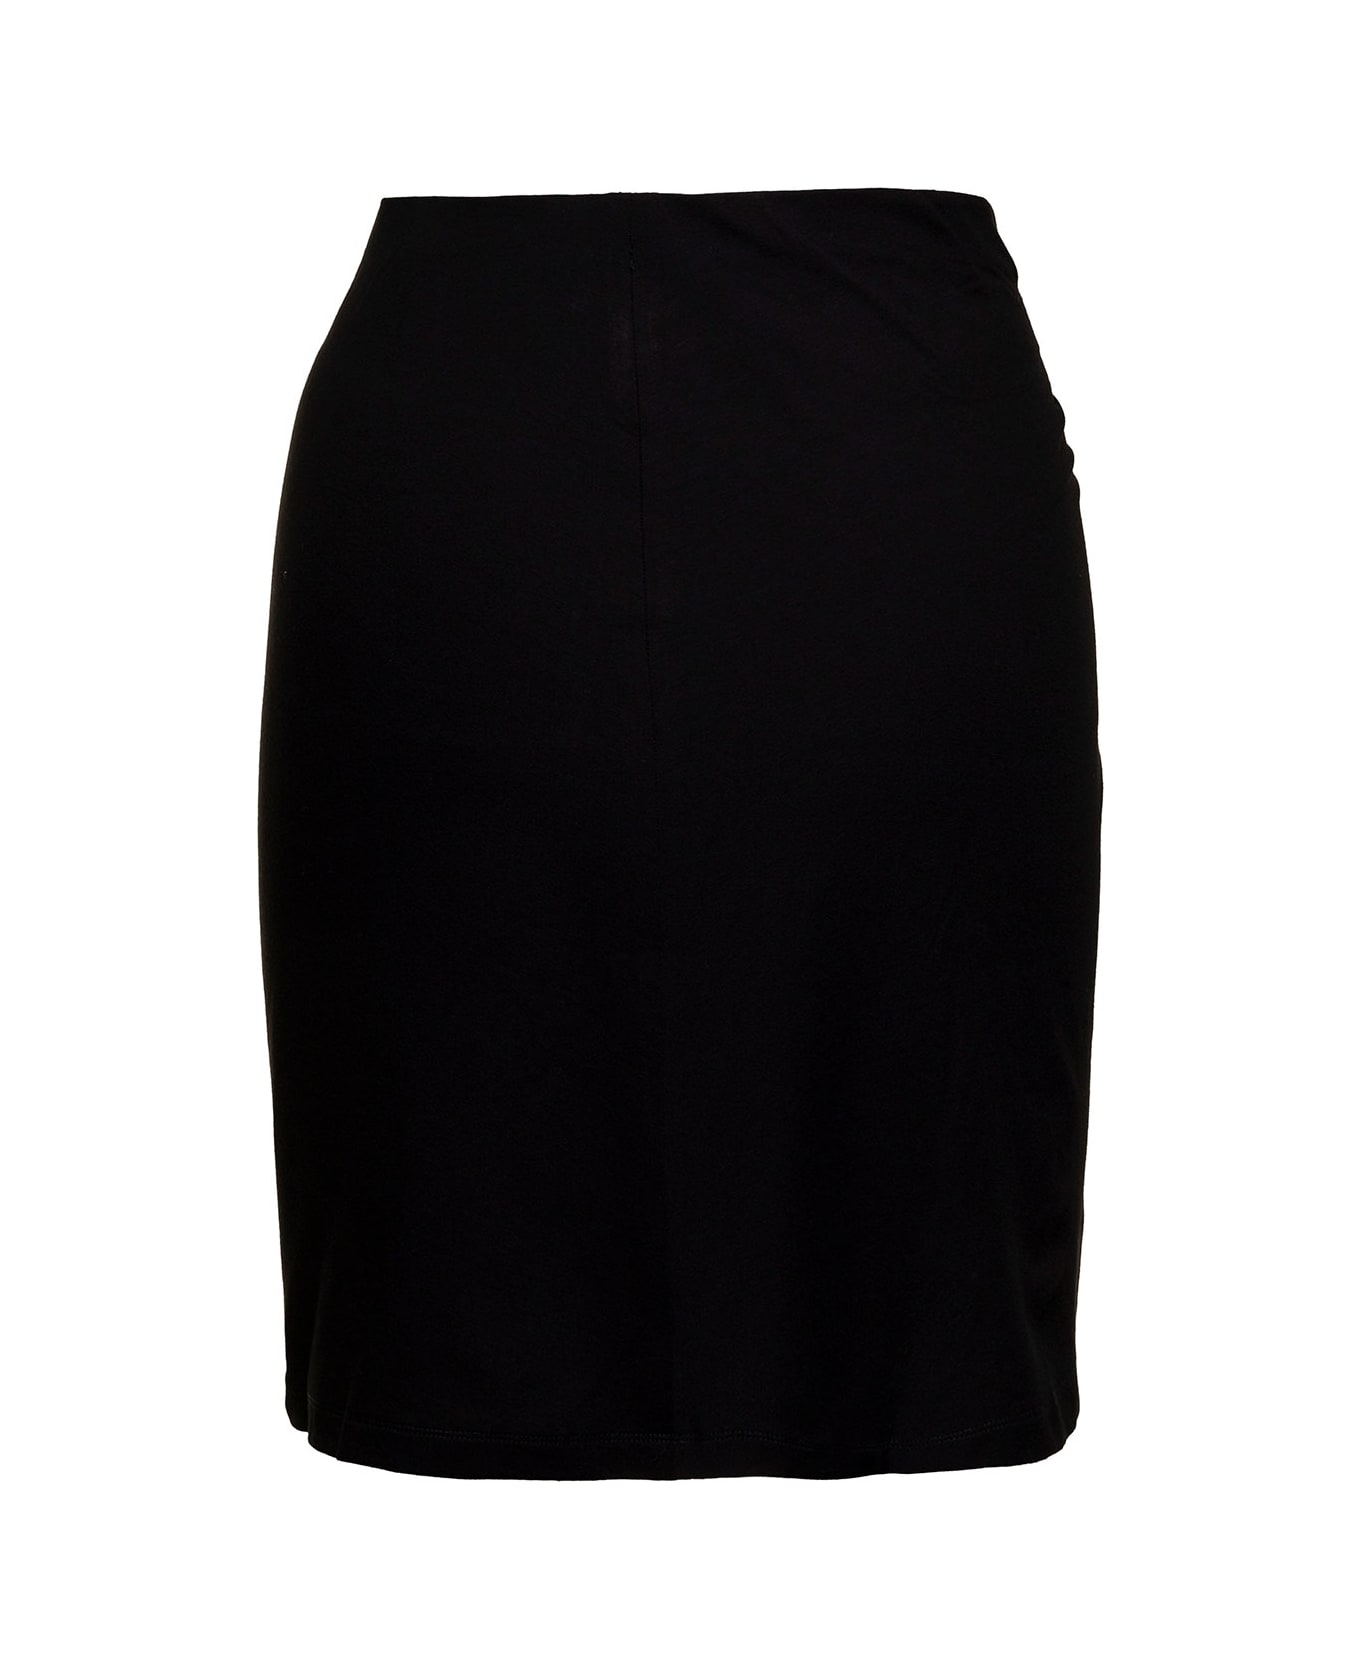 Marant Étoile Natacha Skirt - Black